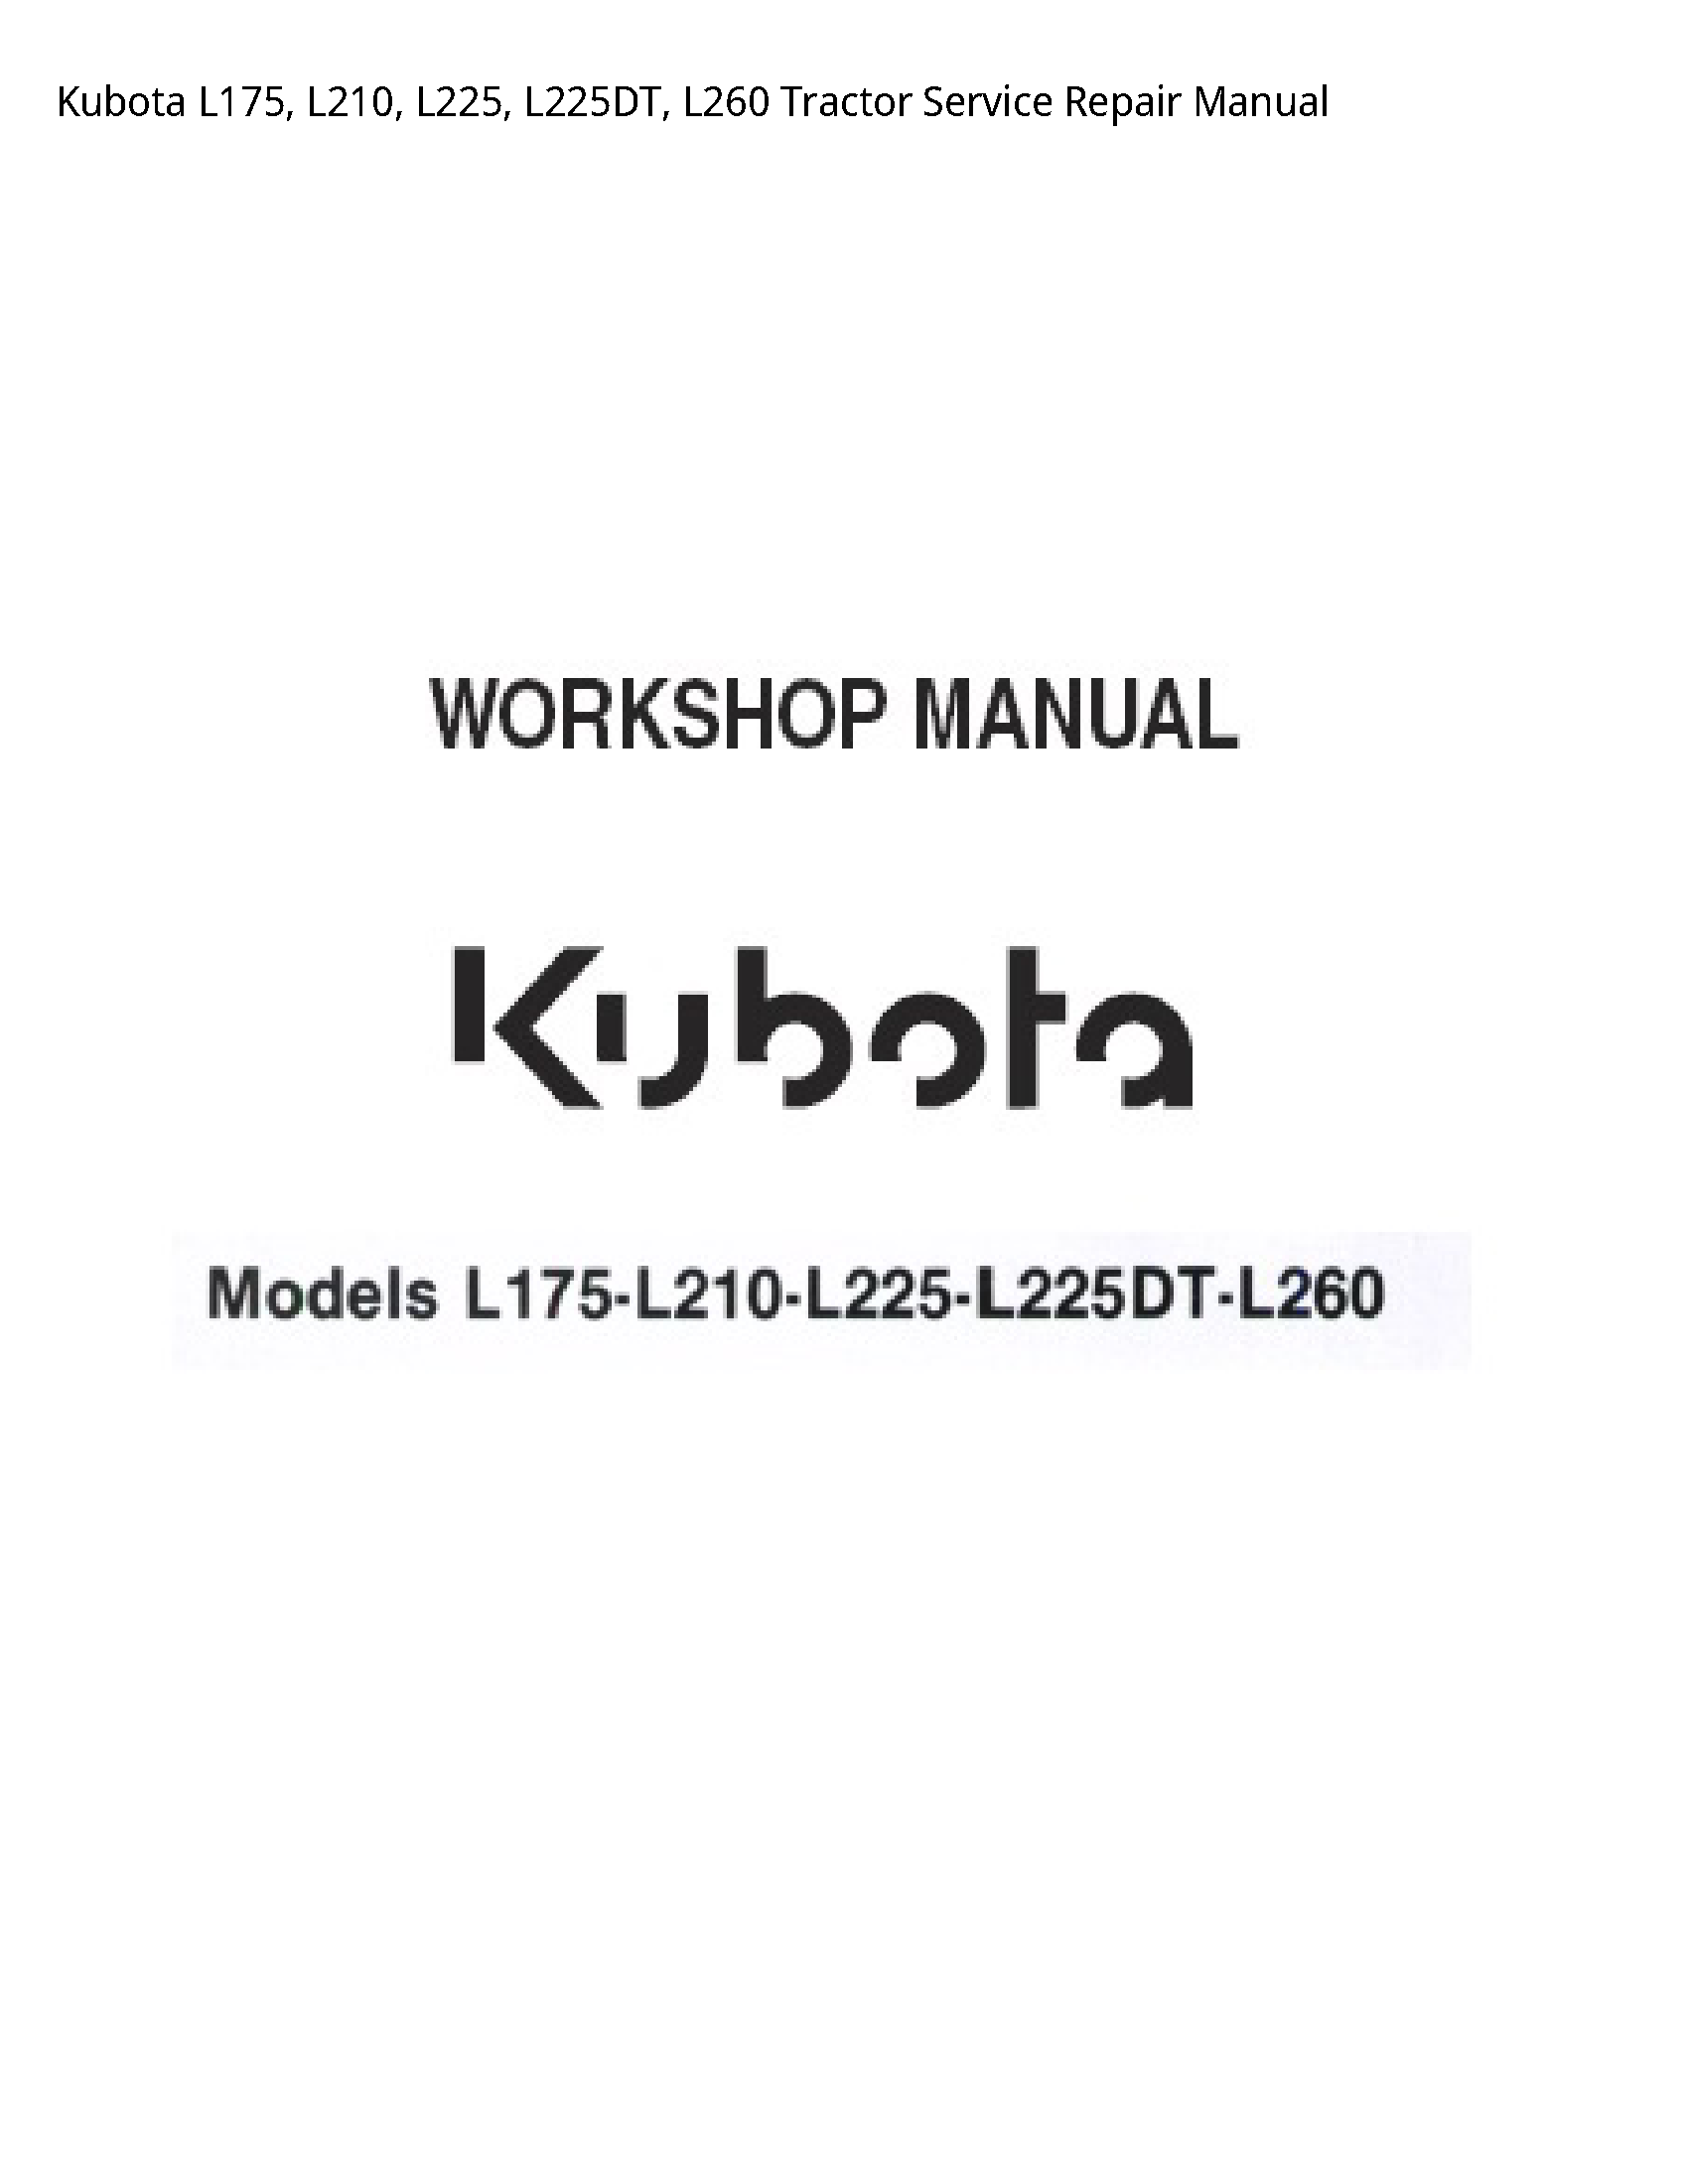 Kubota L175 Tractor manual